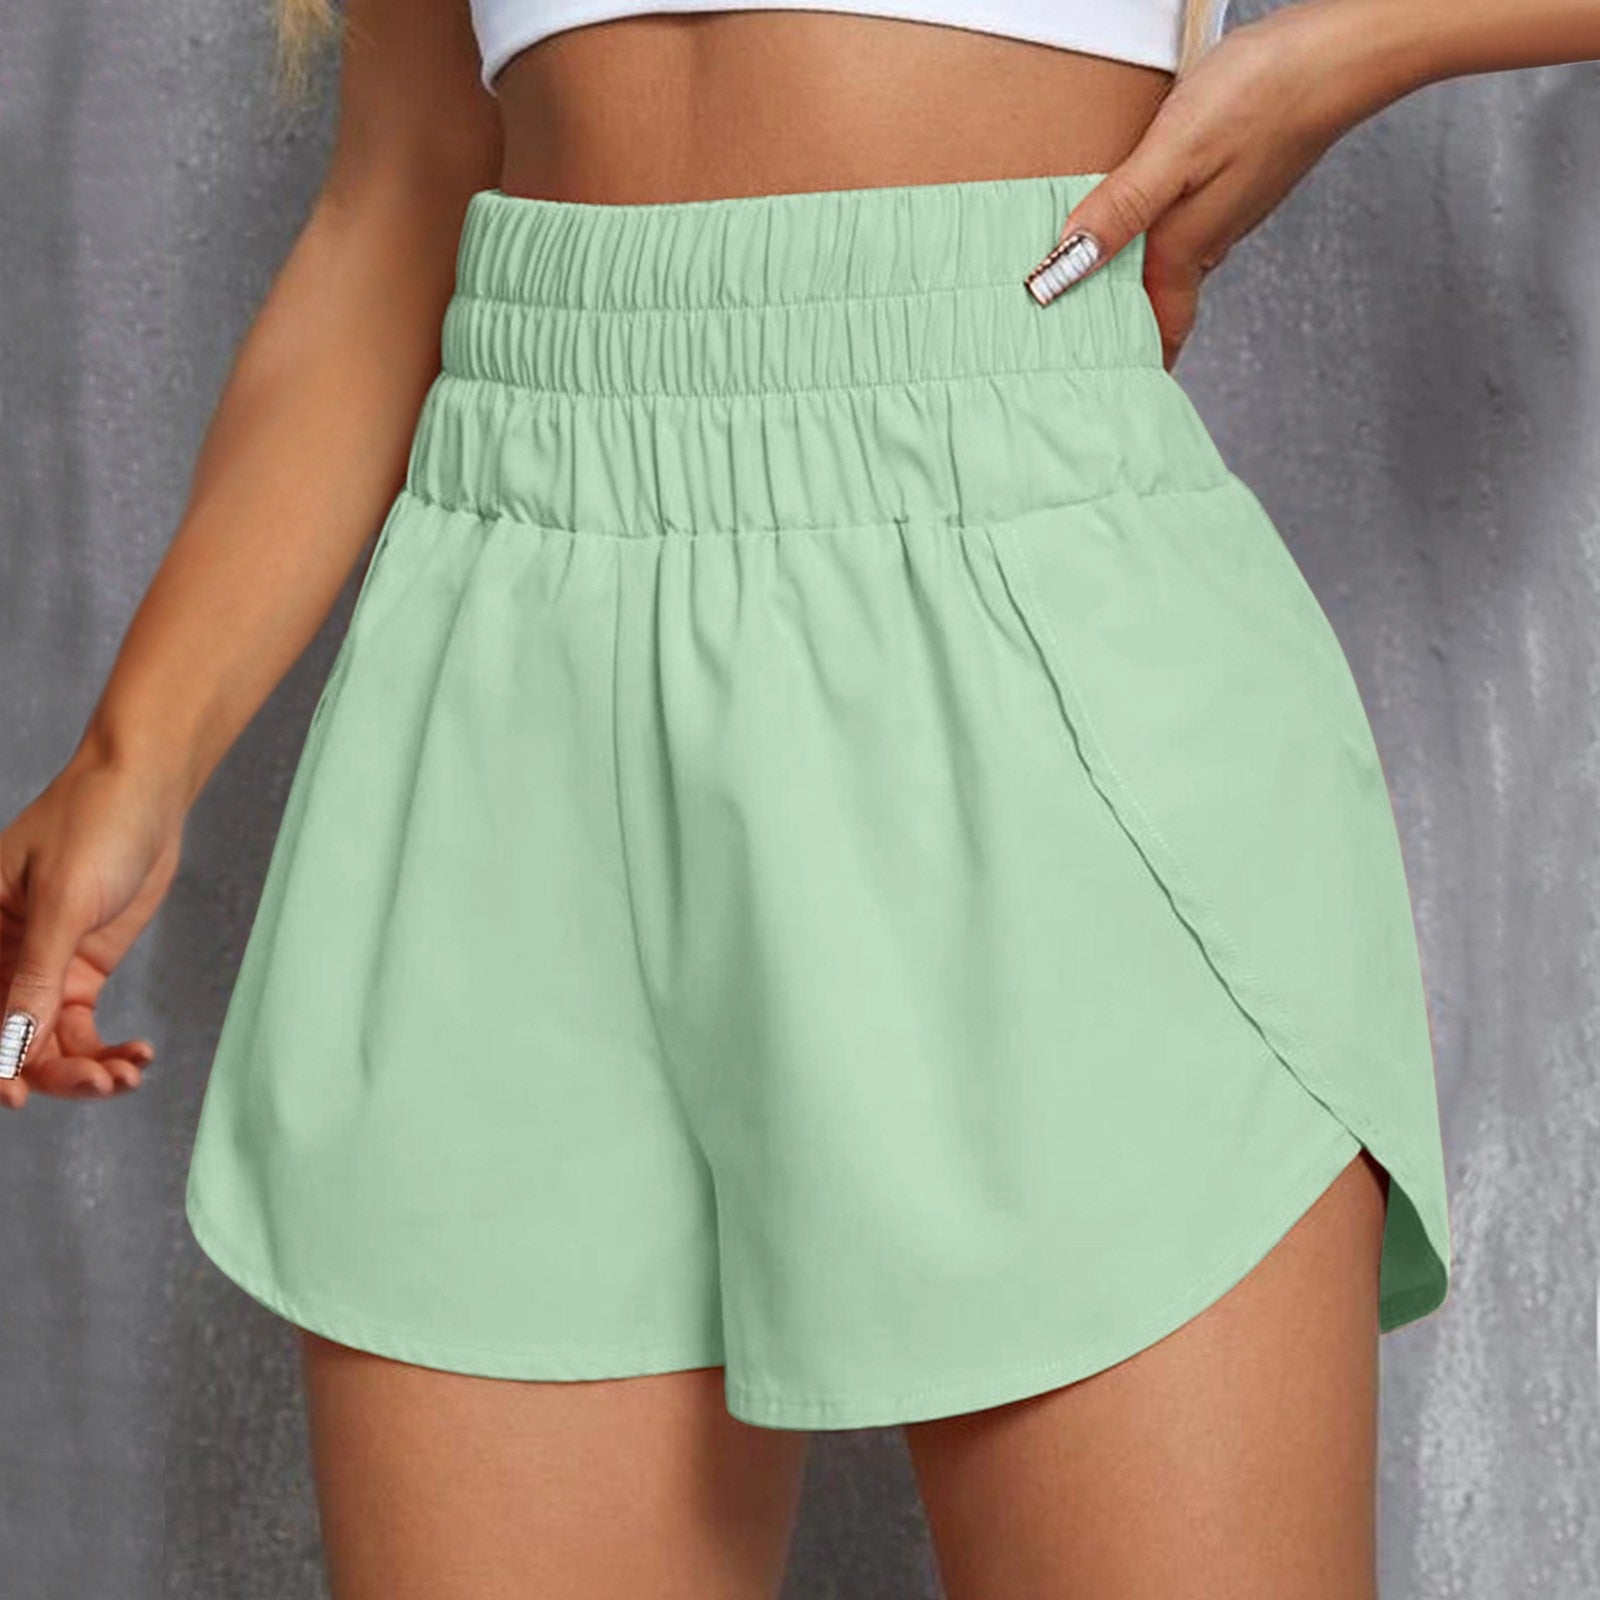 High-Waisted Shorts Trend - Summer Shopping High-Waisted Shorts